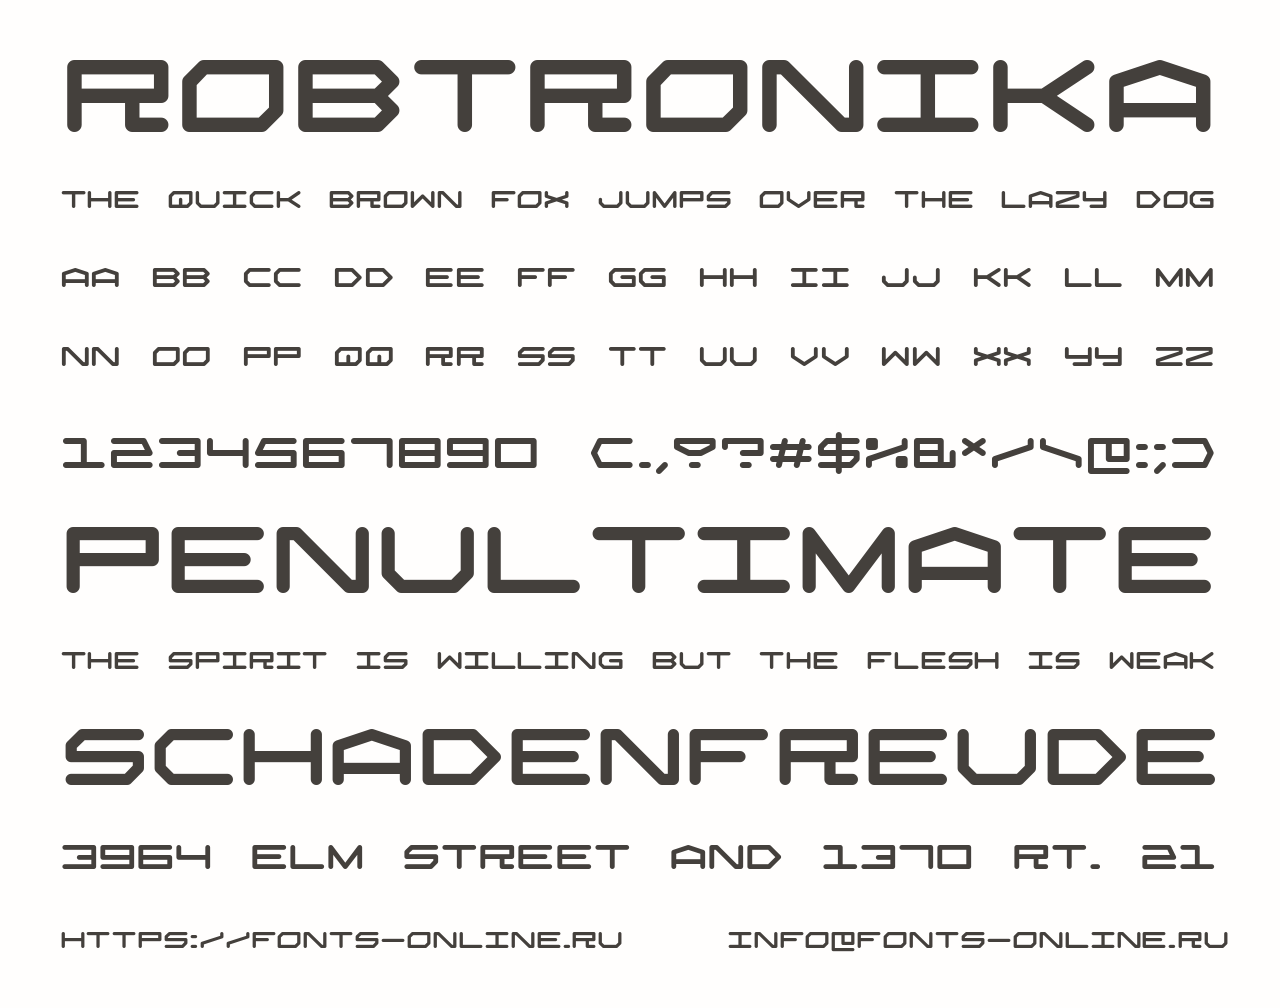 Шрифт Robtronika